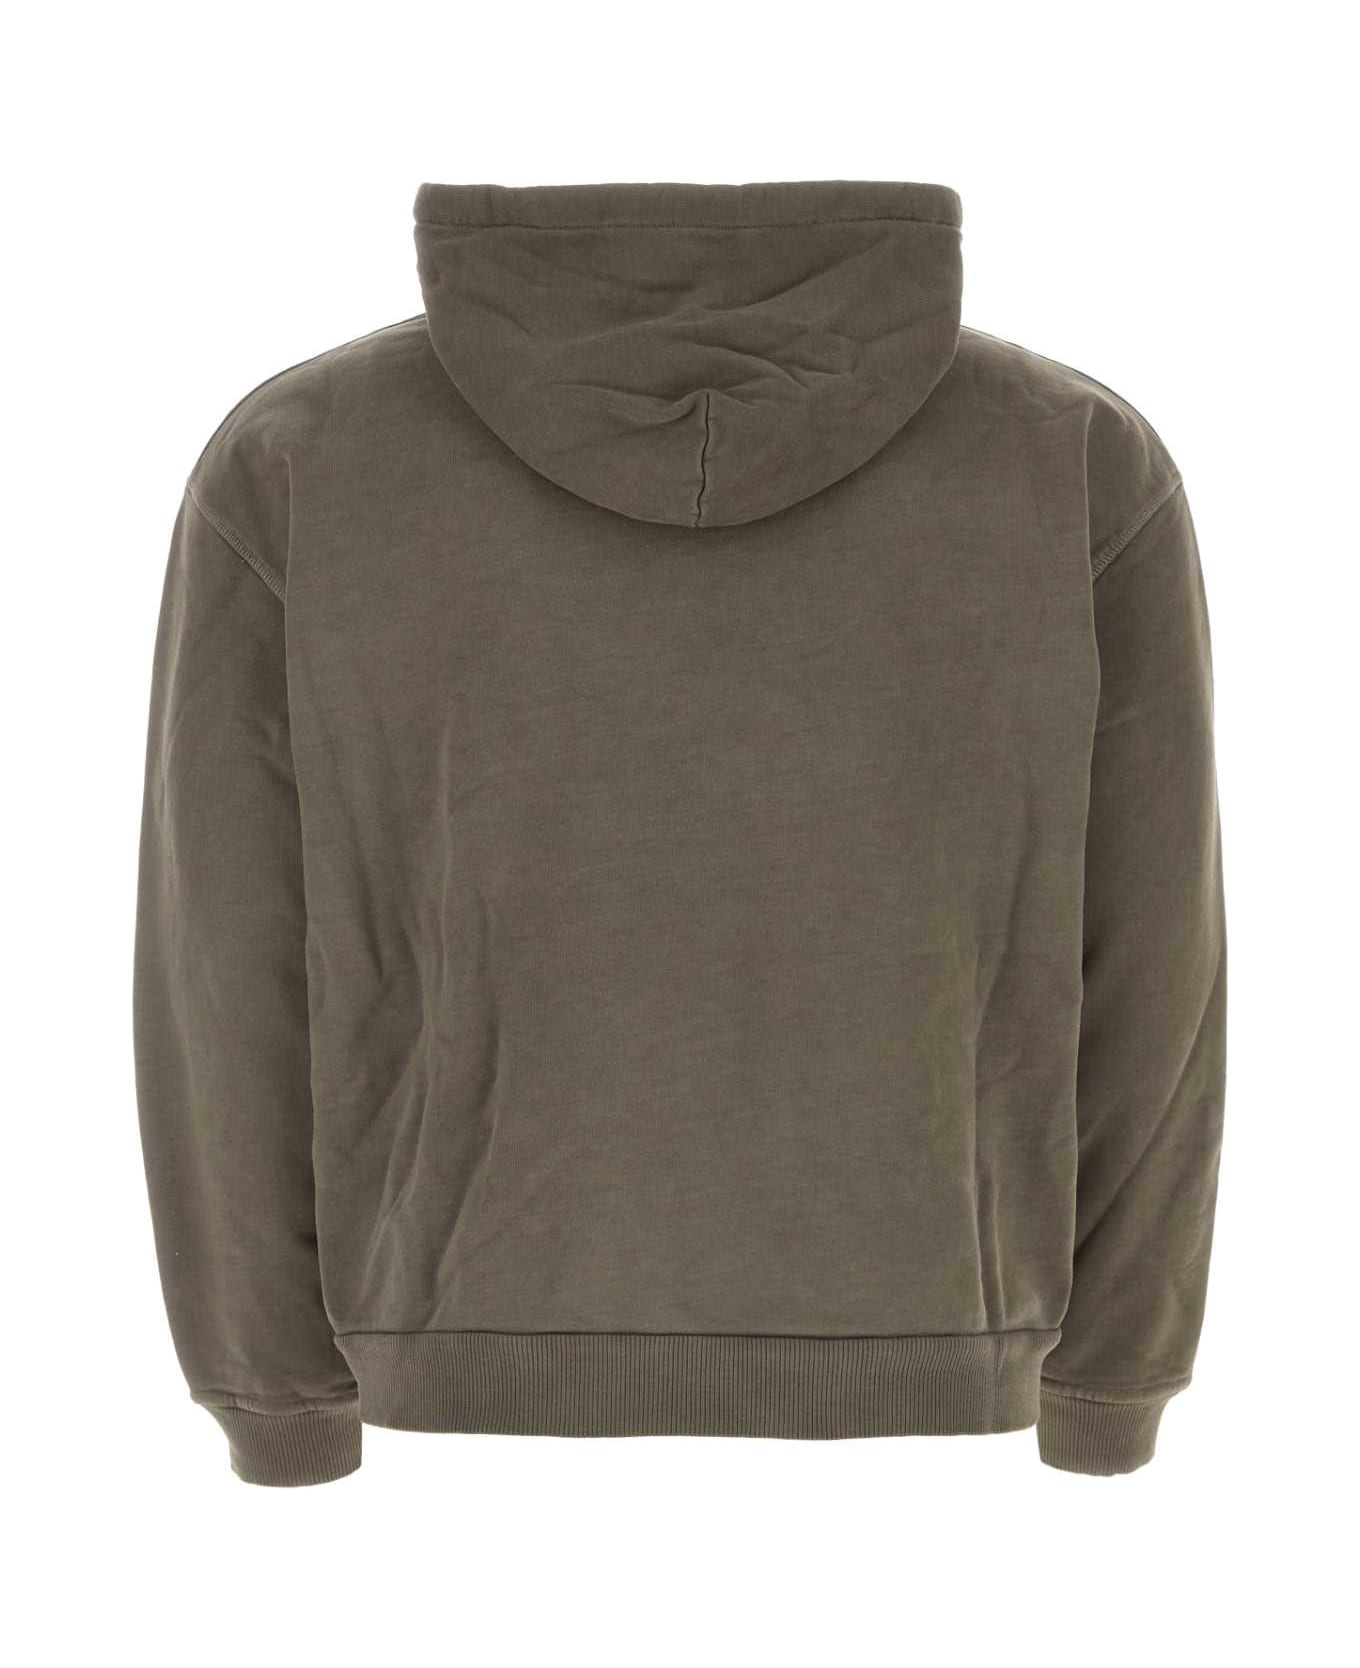 Nanushka Dark Grey Cotton Sweatshirt - ASPHALT フリース